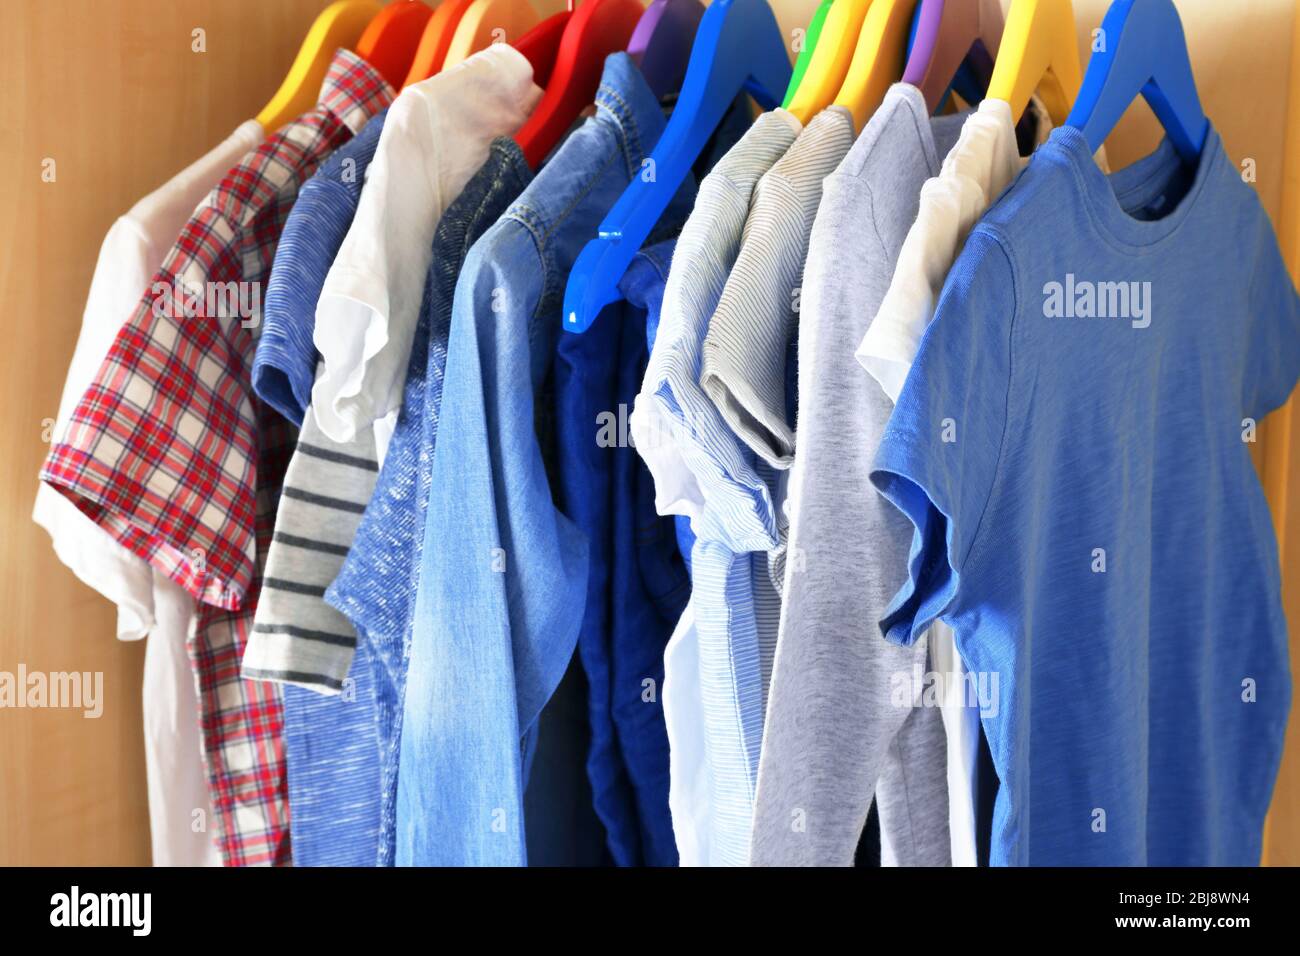 Boy clothes on hangers, closeup Stock Photo